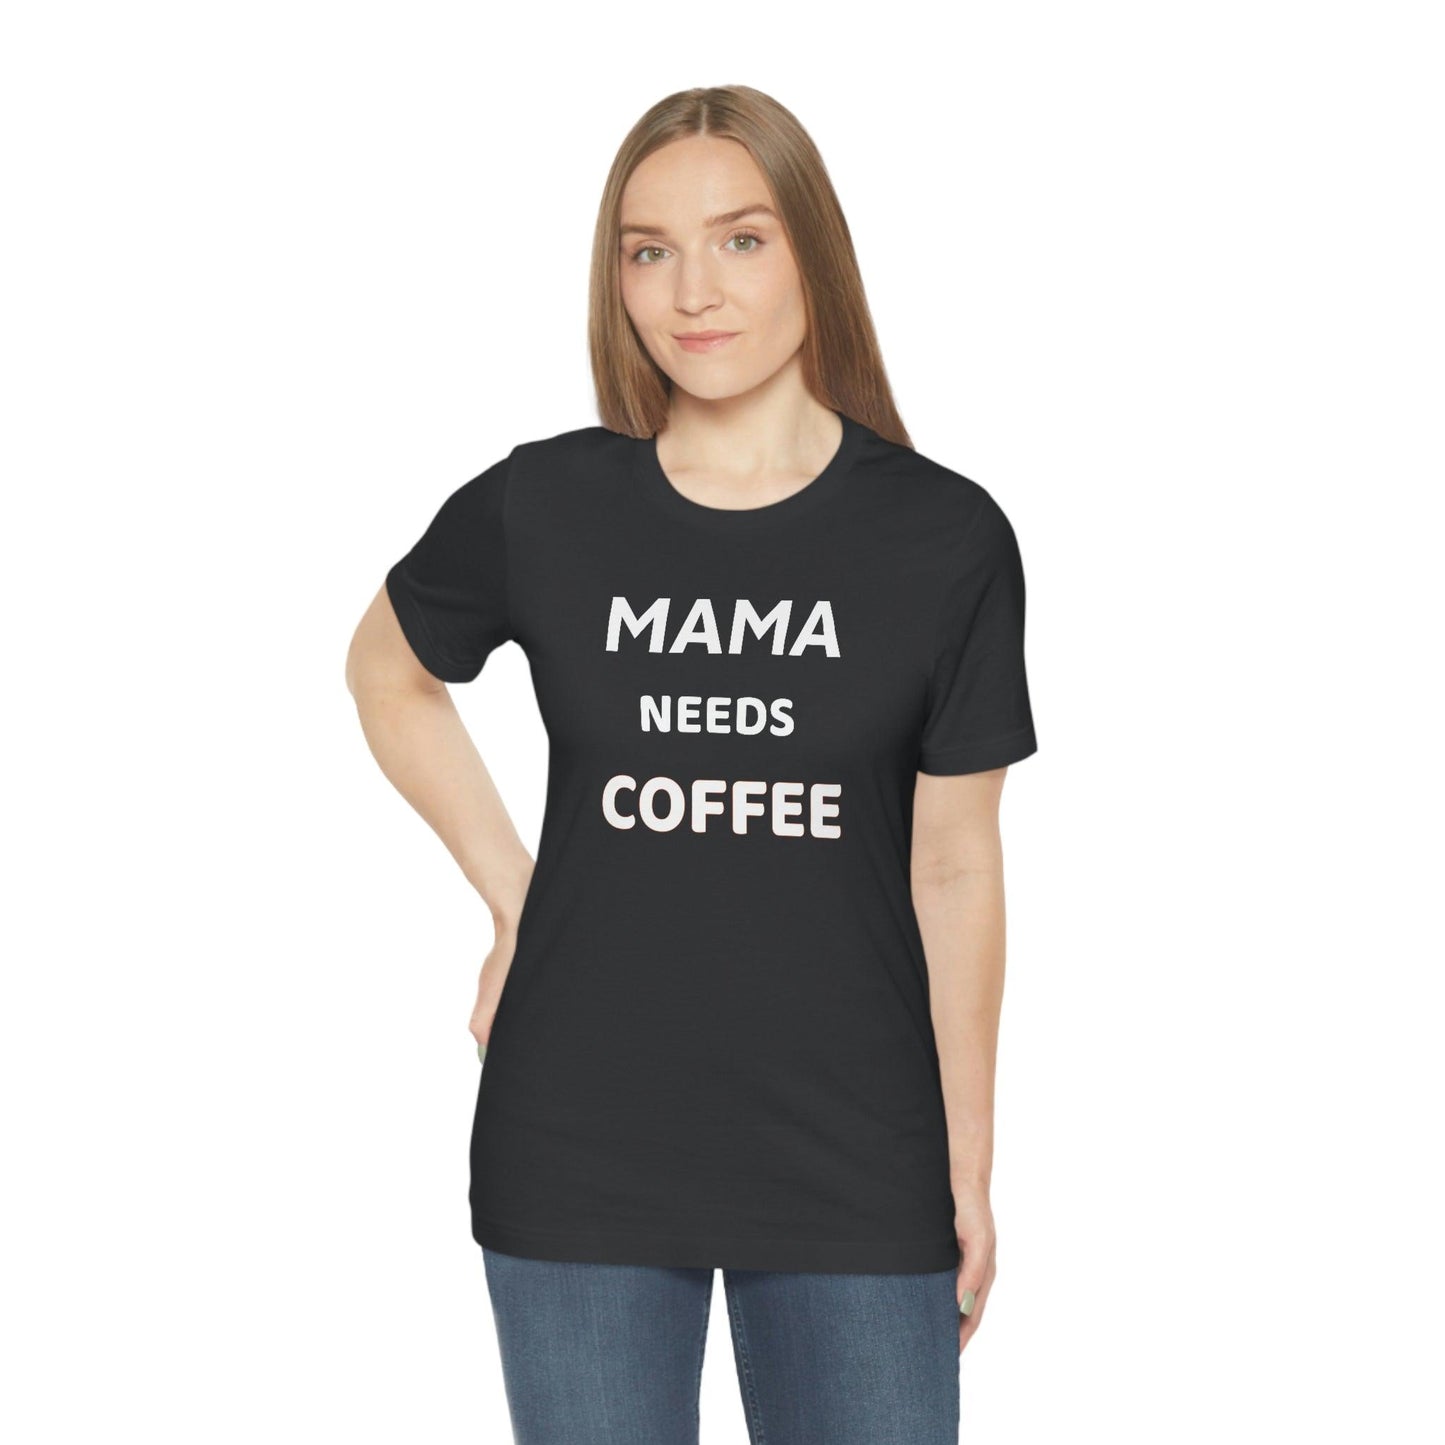 Mama needs Coffee - coffee lover shirt, funny coffee shirt - funny shirt